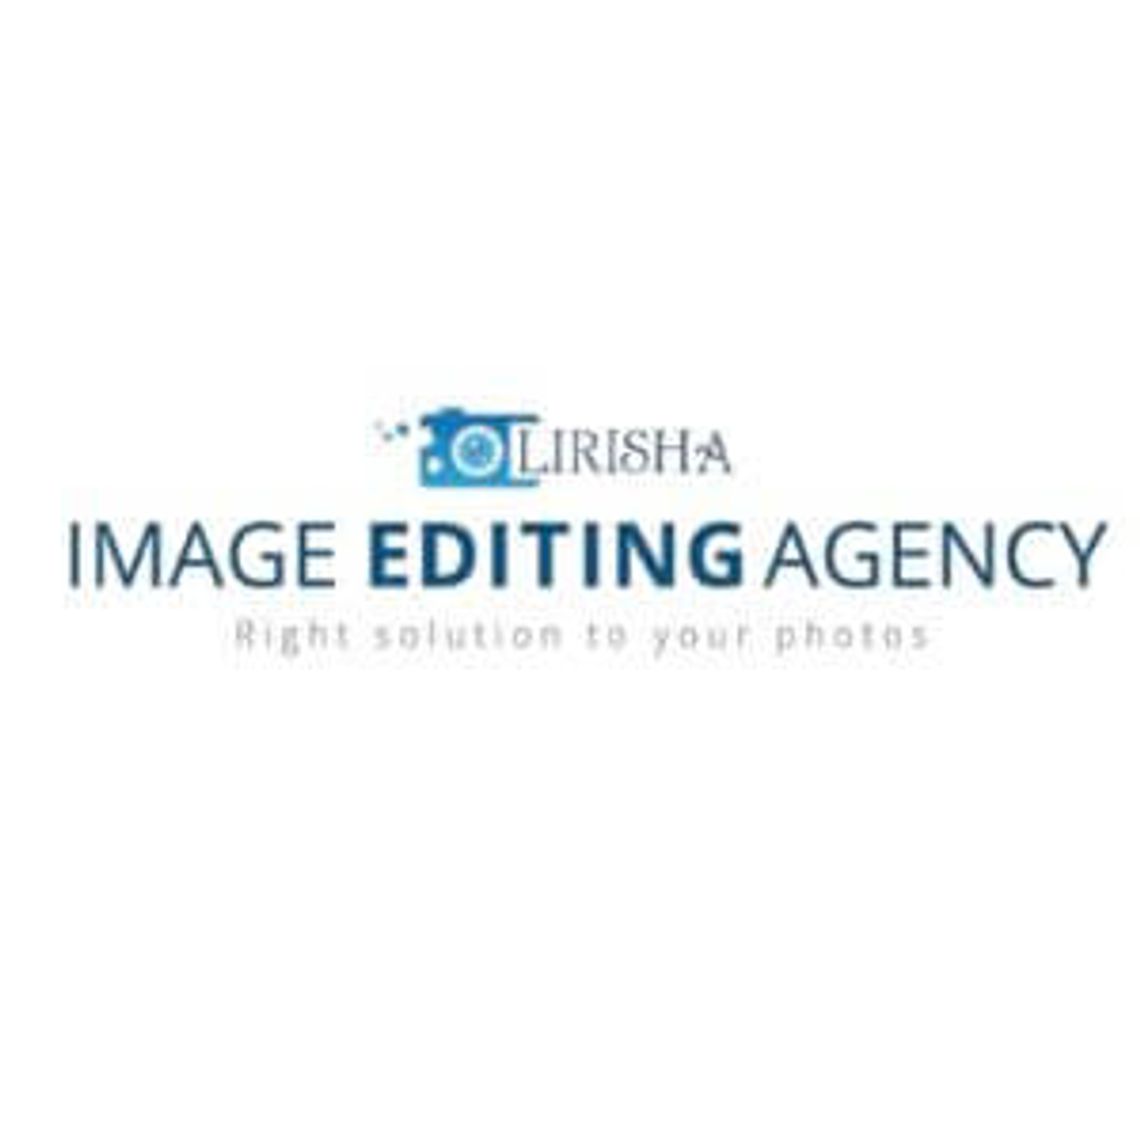 Image Background Removal Service – Imageeditingagency